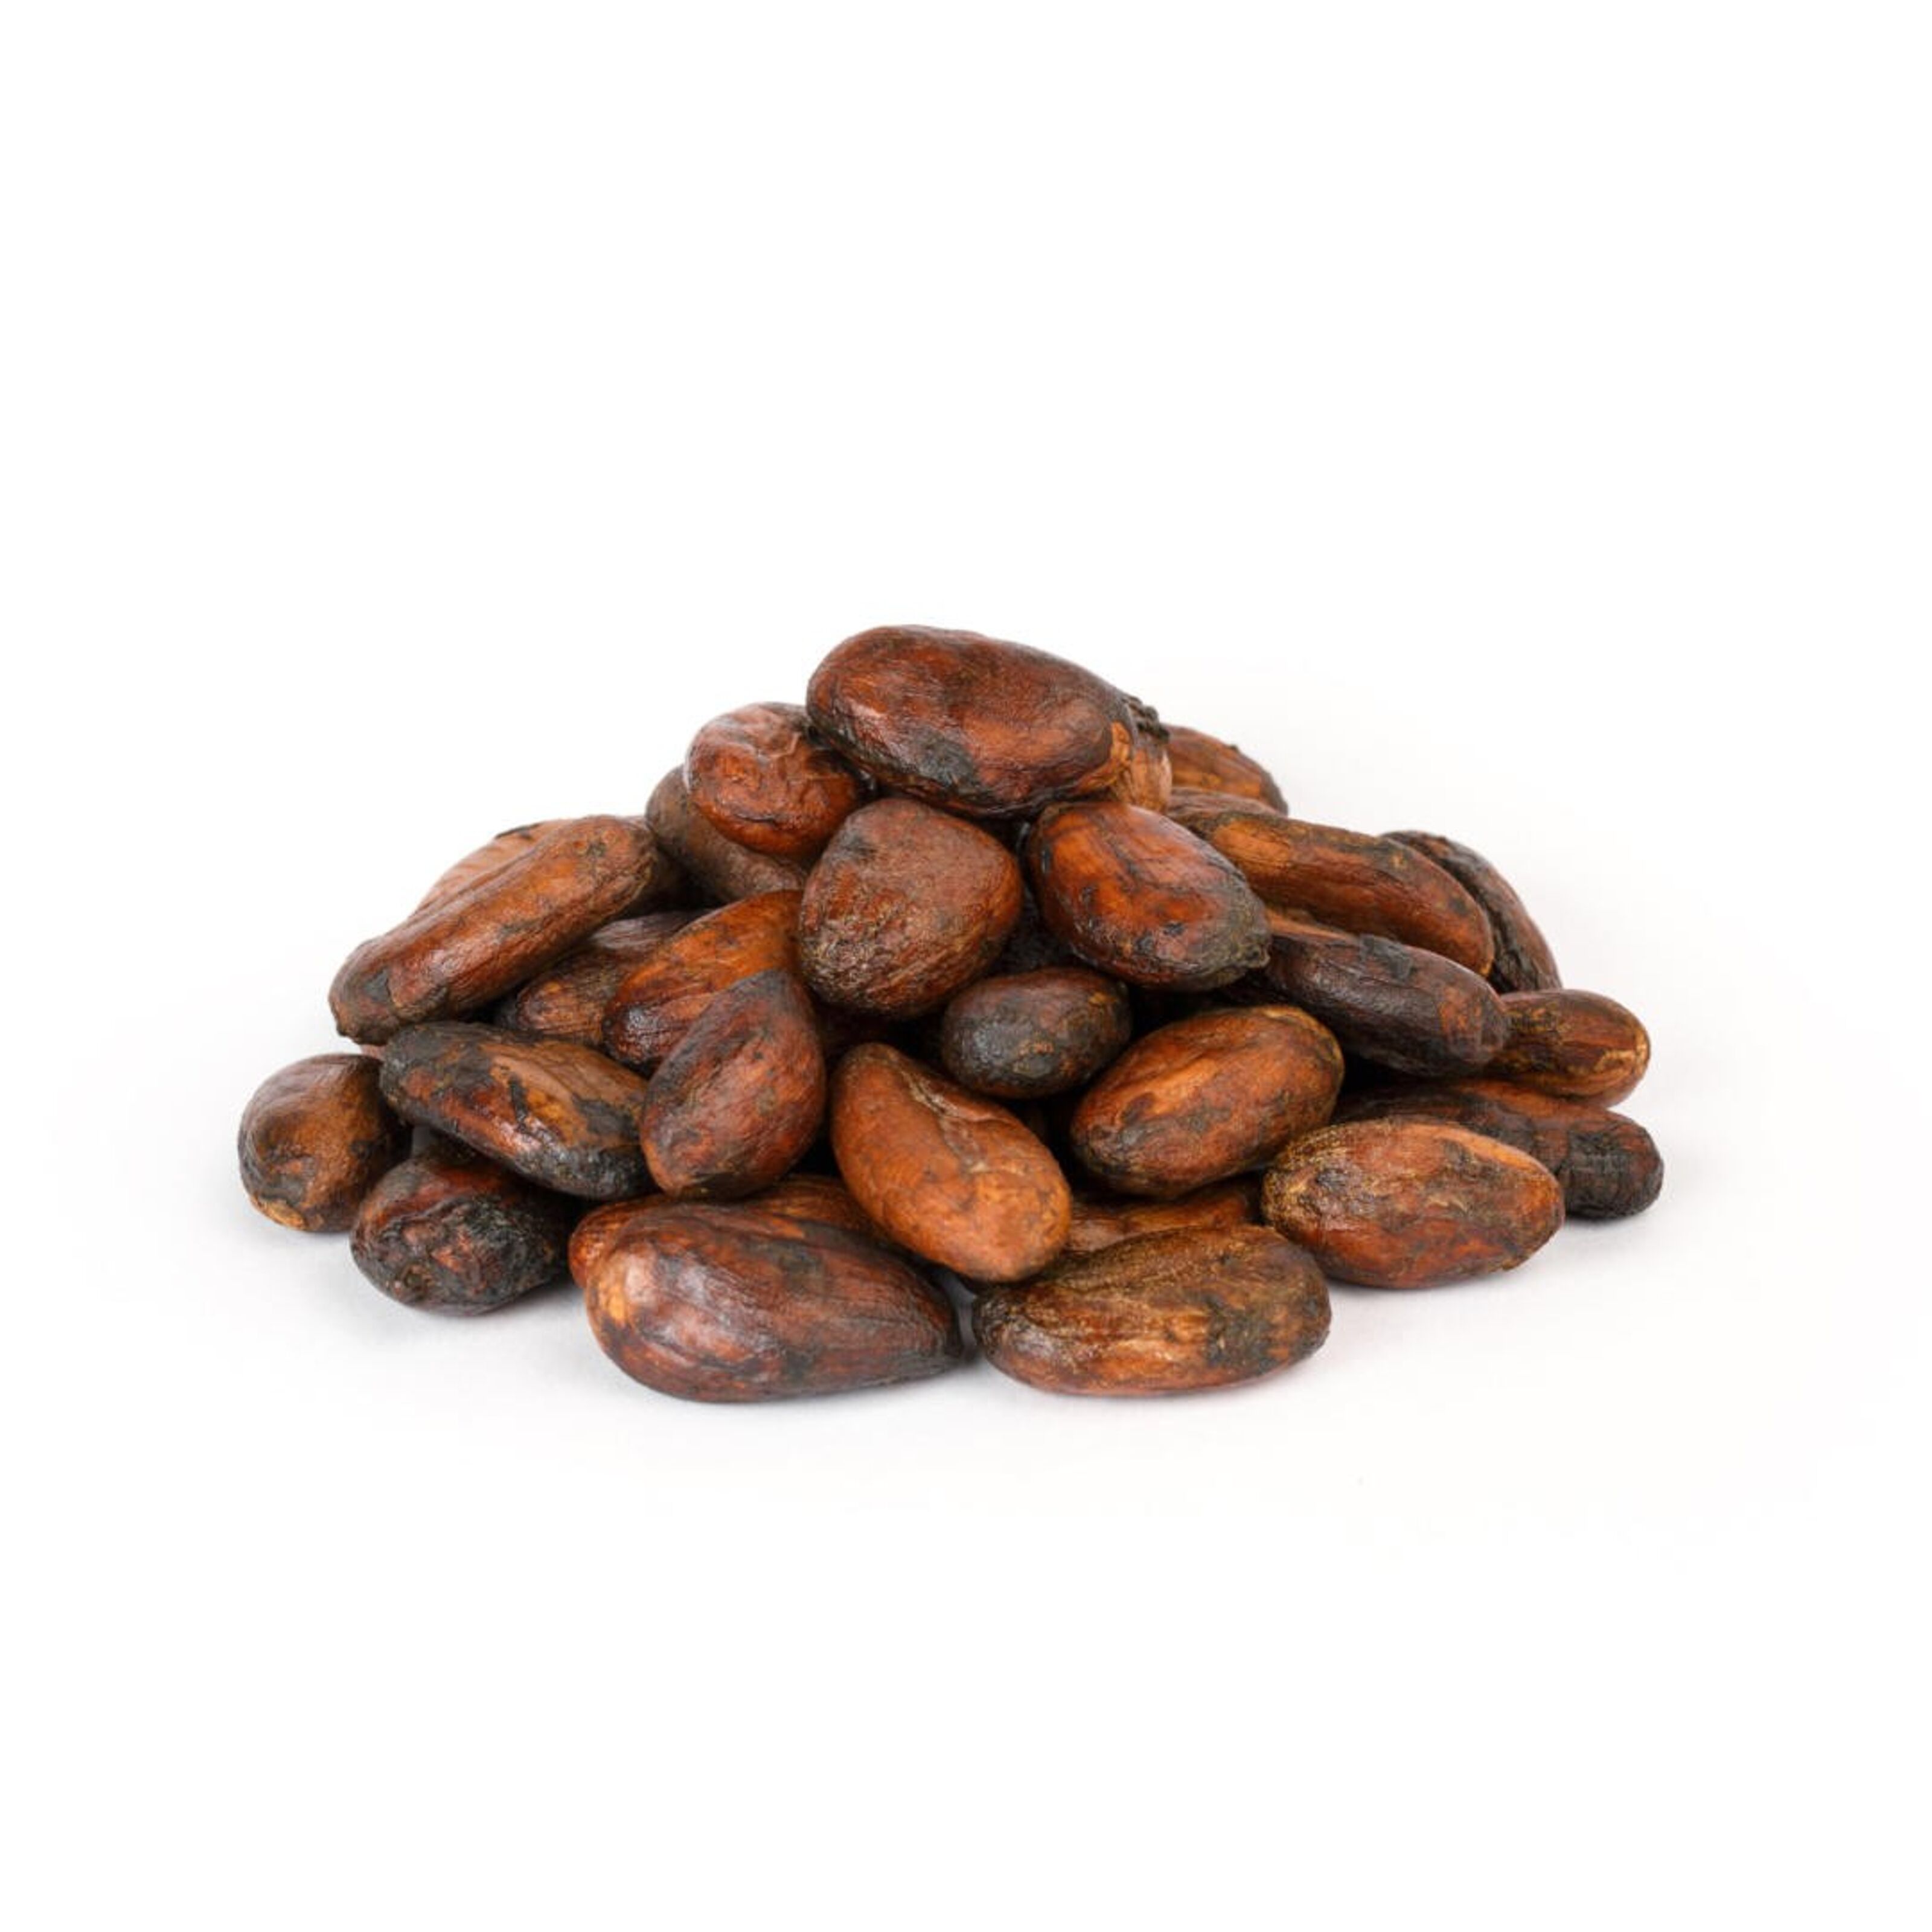 Buy wholesale Organic cocoa beans - Whole raw dried - Bulk - 1000g